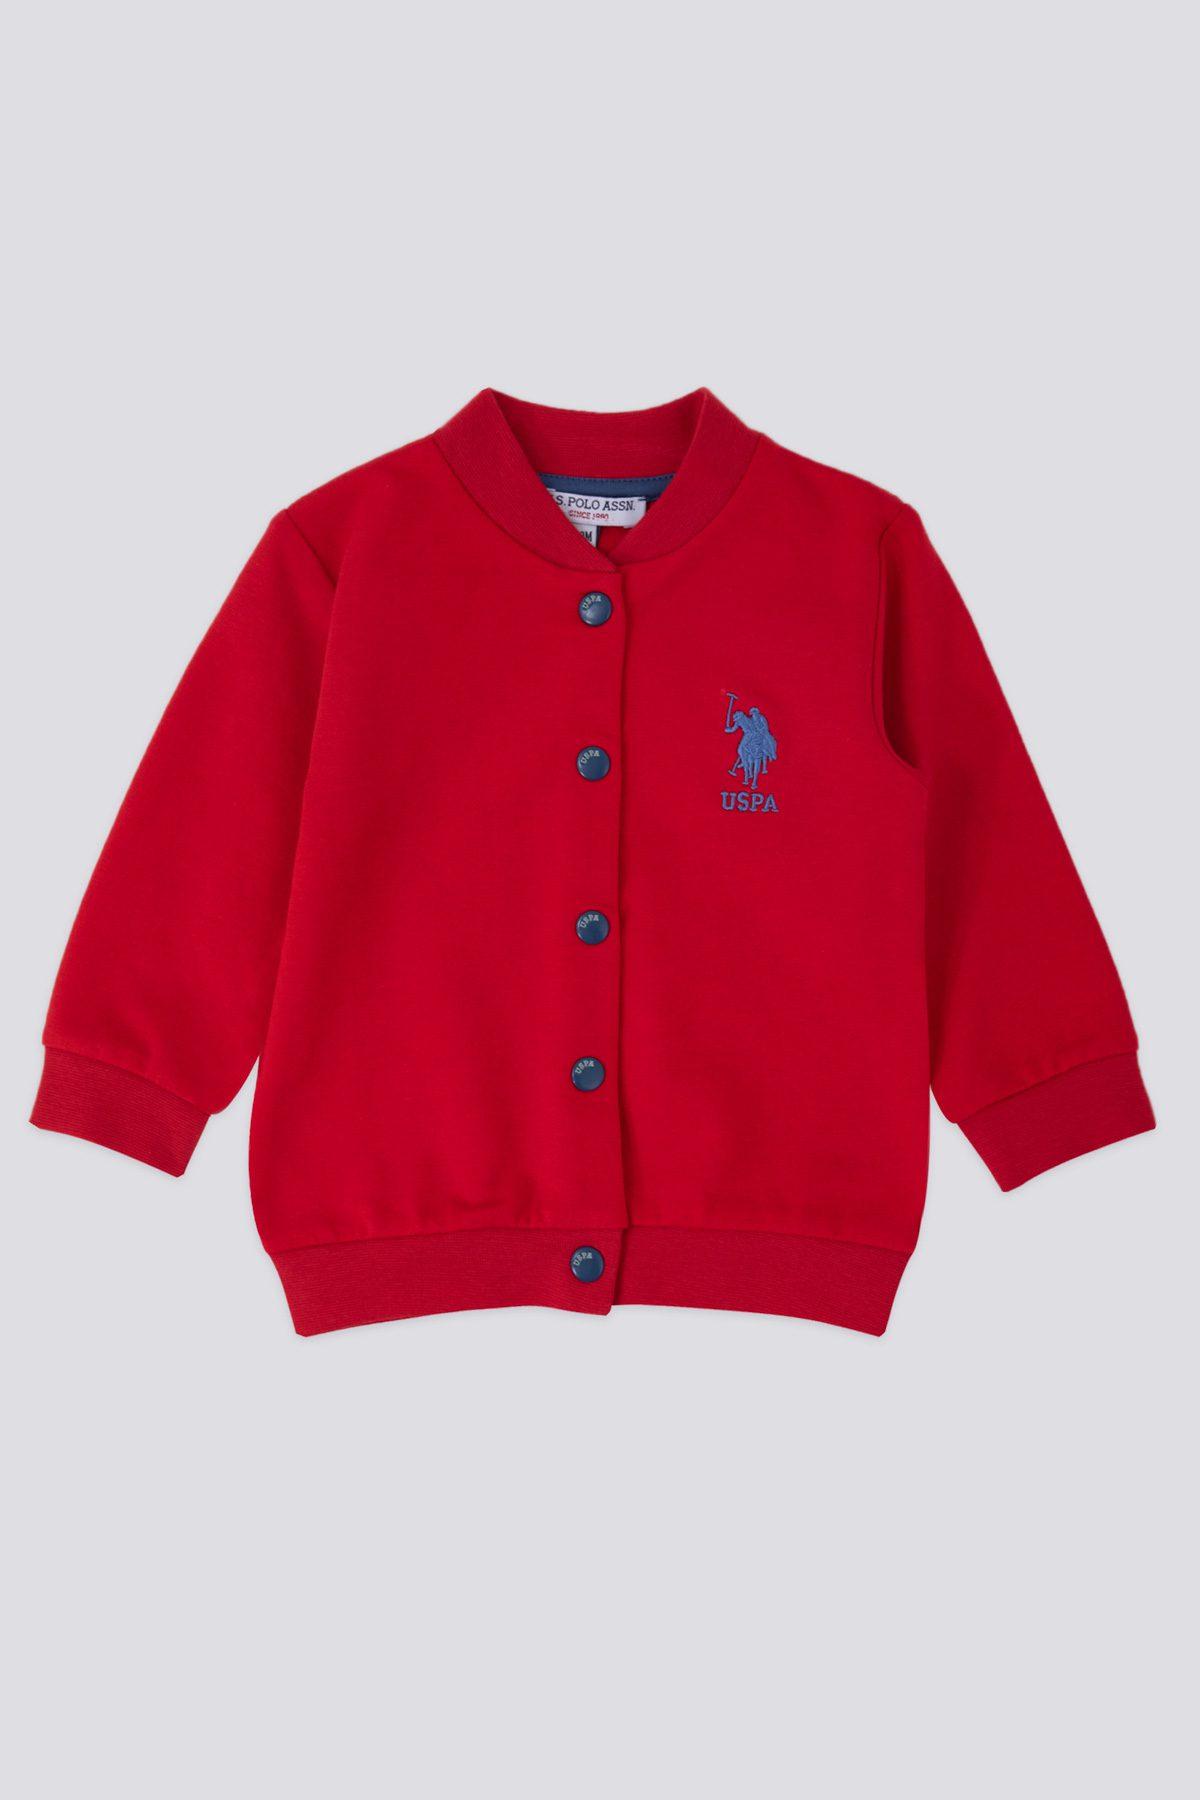 U.S. Polo Assn. Koledž jakna za bebe USB1148, Crvena